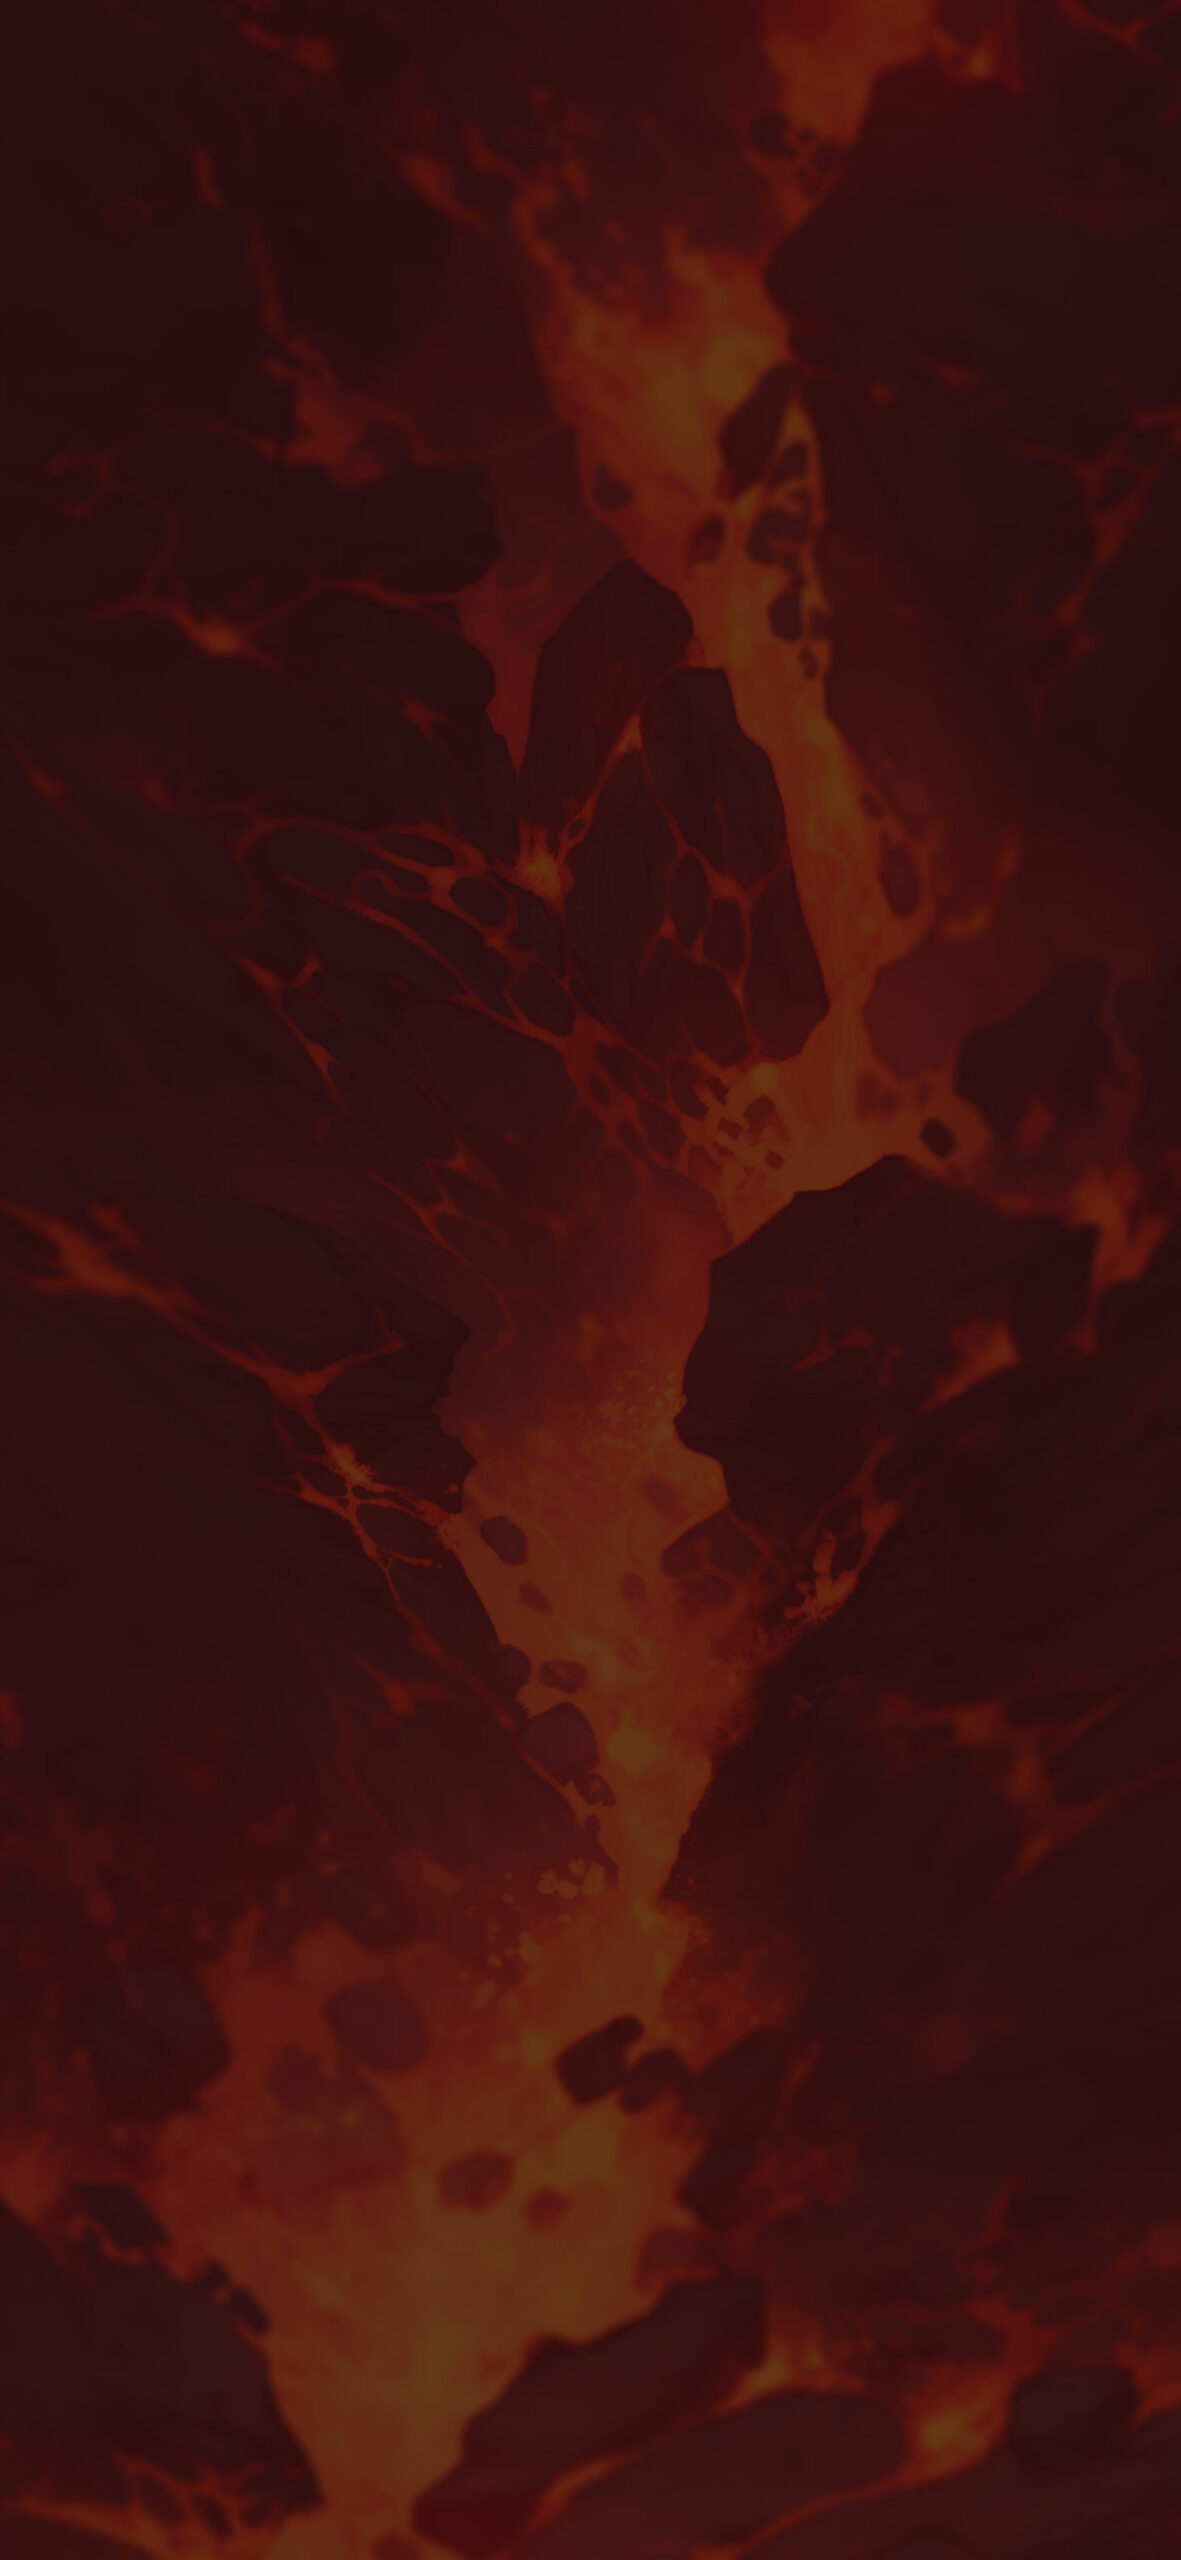 Fiery lava & stones cool wallpaper Epic nature wallpaper iphon